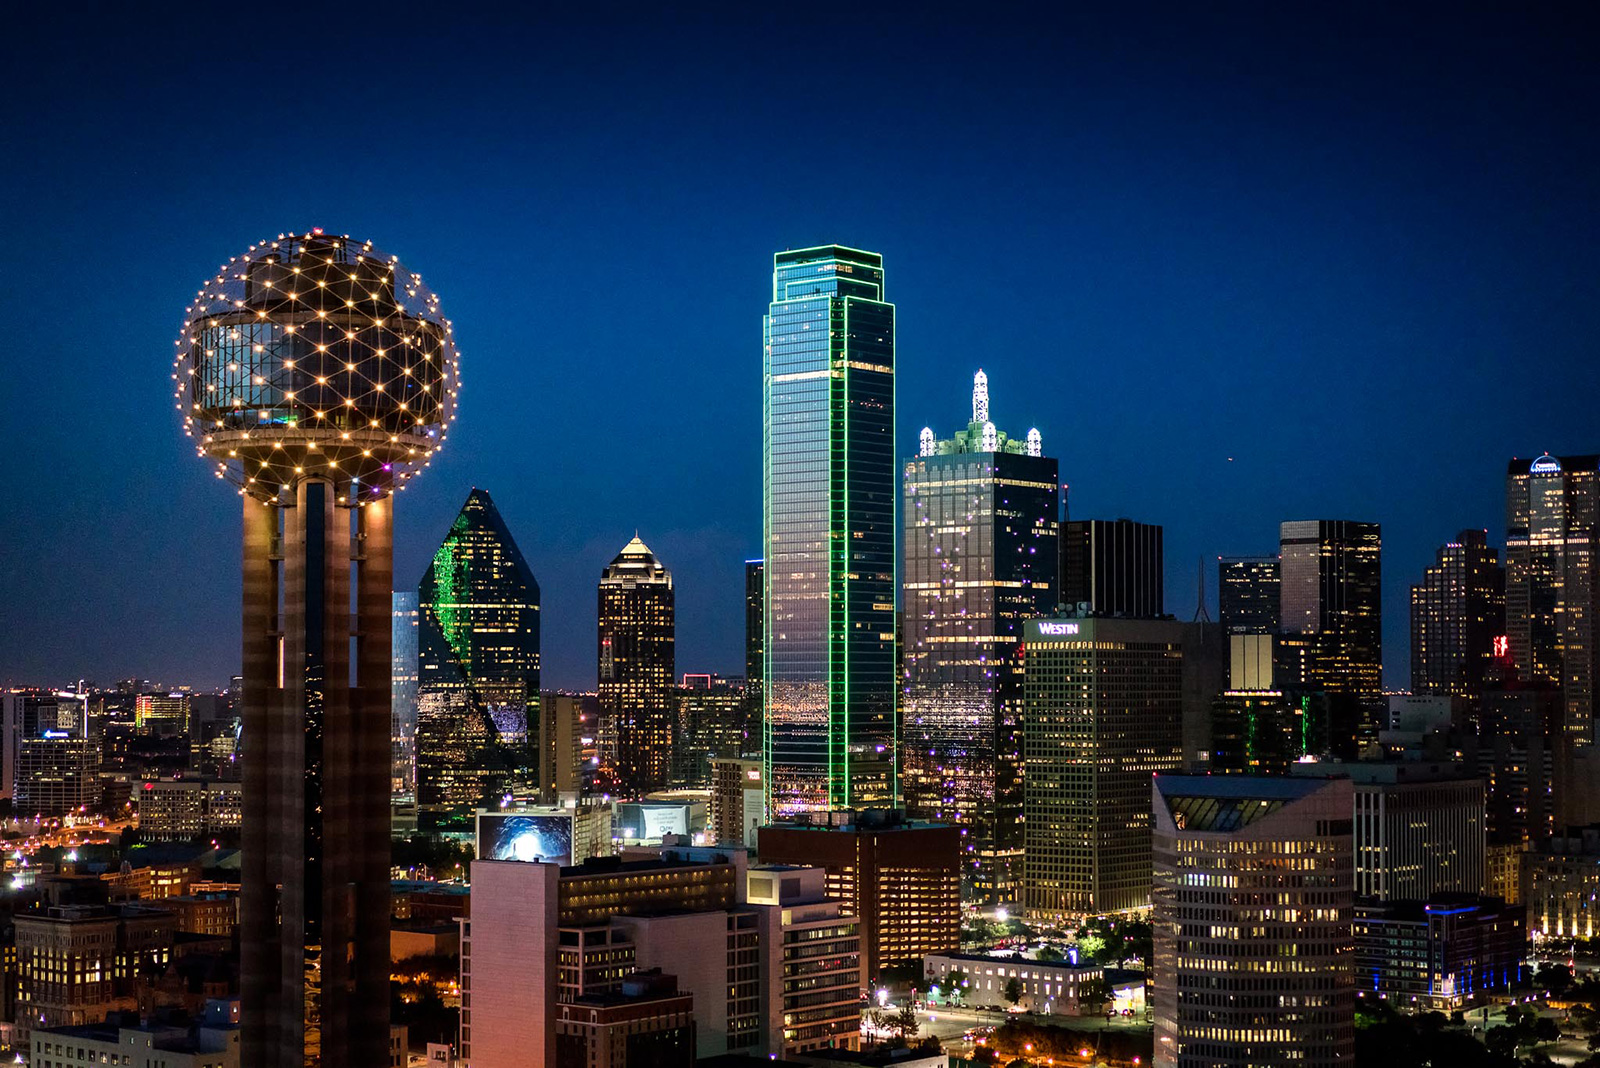 The City of Dallas at Night